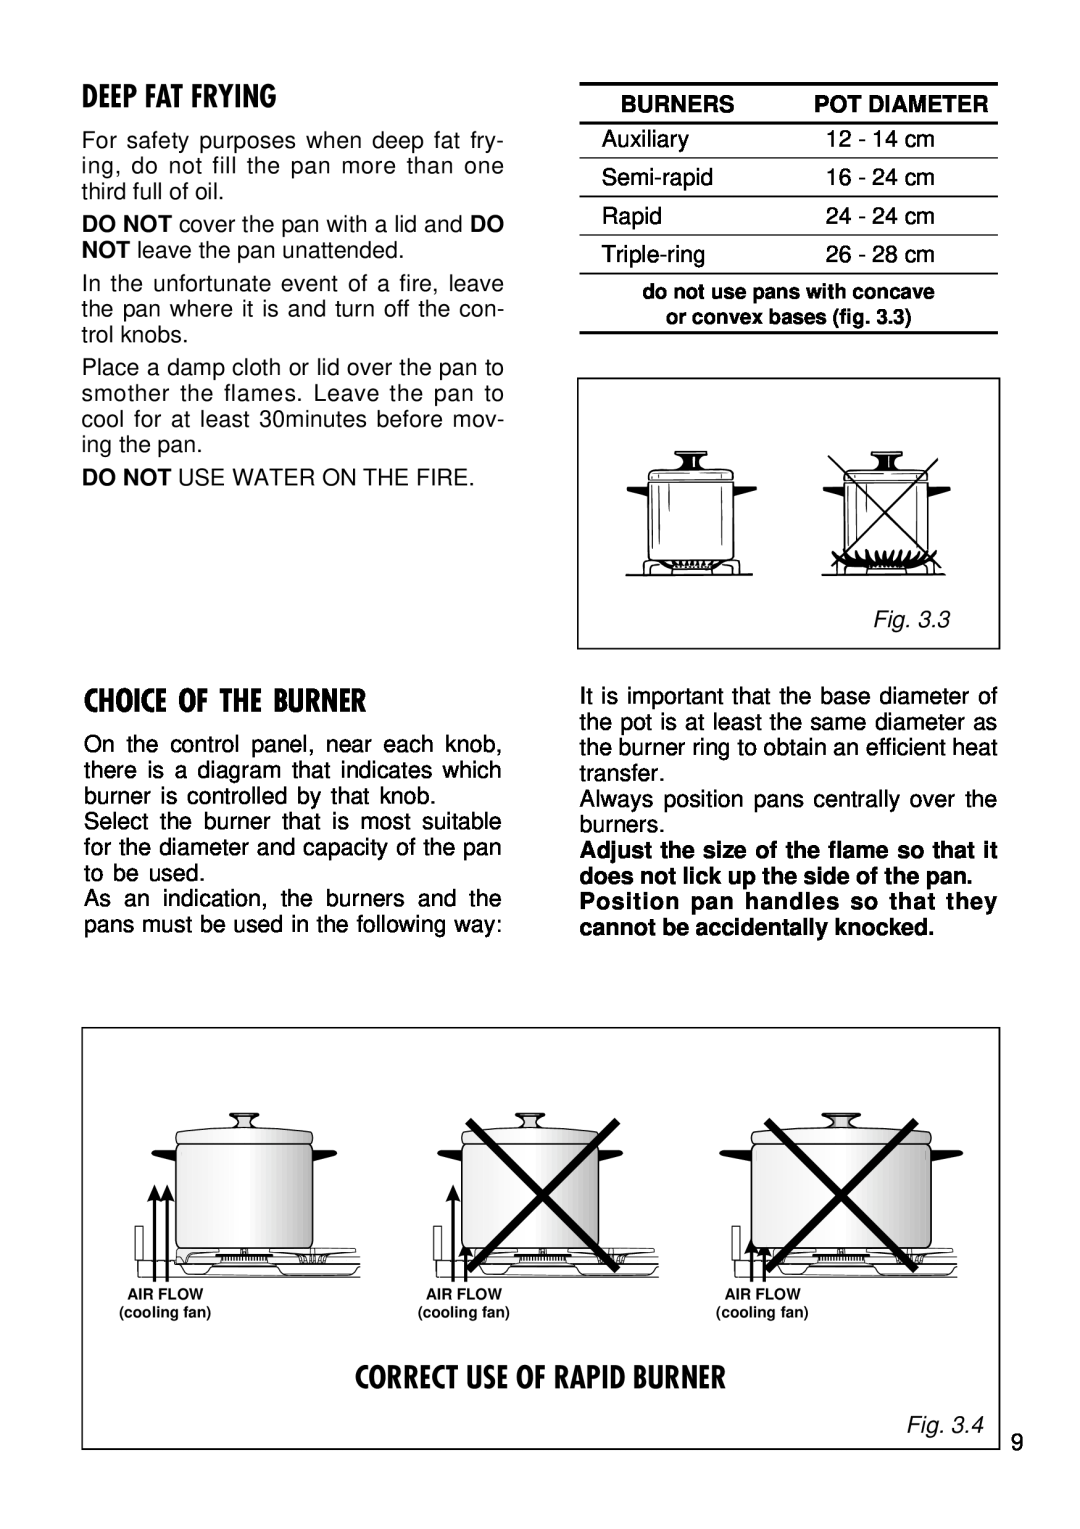 Kenwood CK 740 manual Deep Fat Frying, Choice Of The Burner, Correct Use Of Rapid Burner, Burners, Pot Diameter 